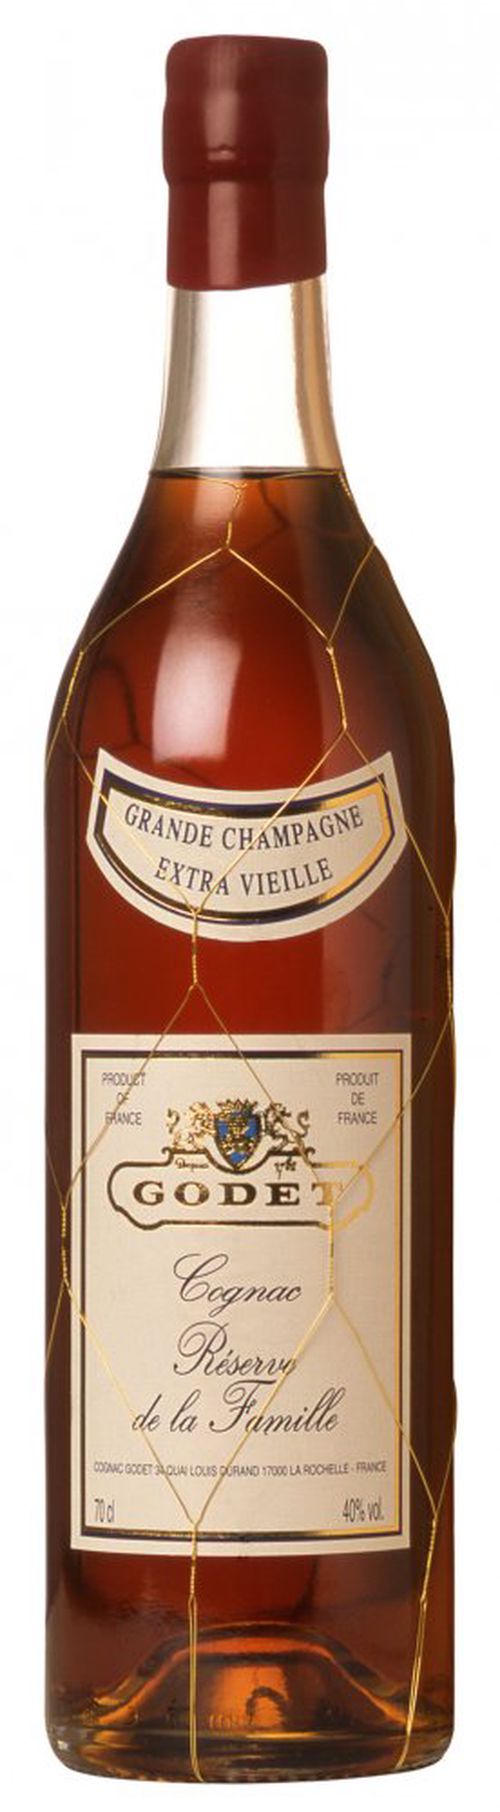 Godet Reserve de la Famille Grand Champagne 40y 0,7l 40%